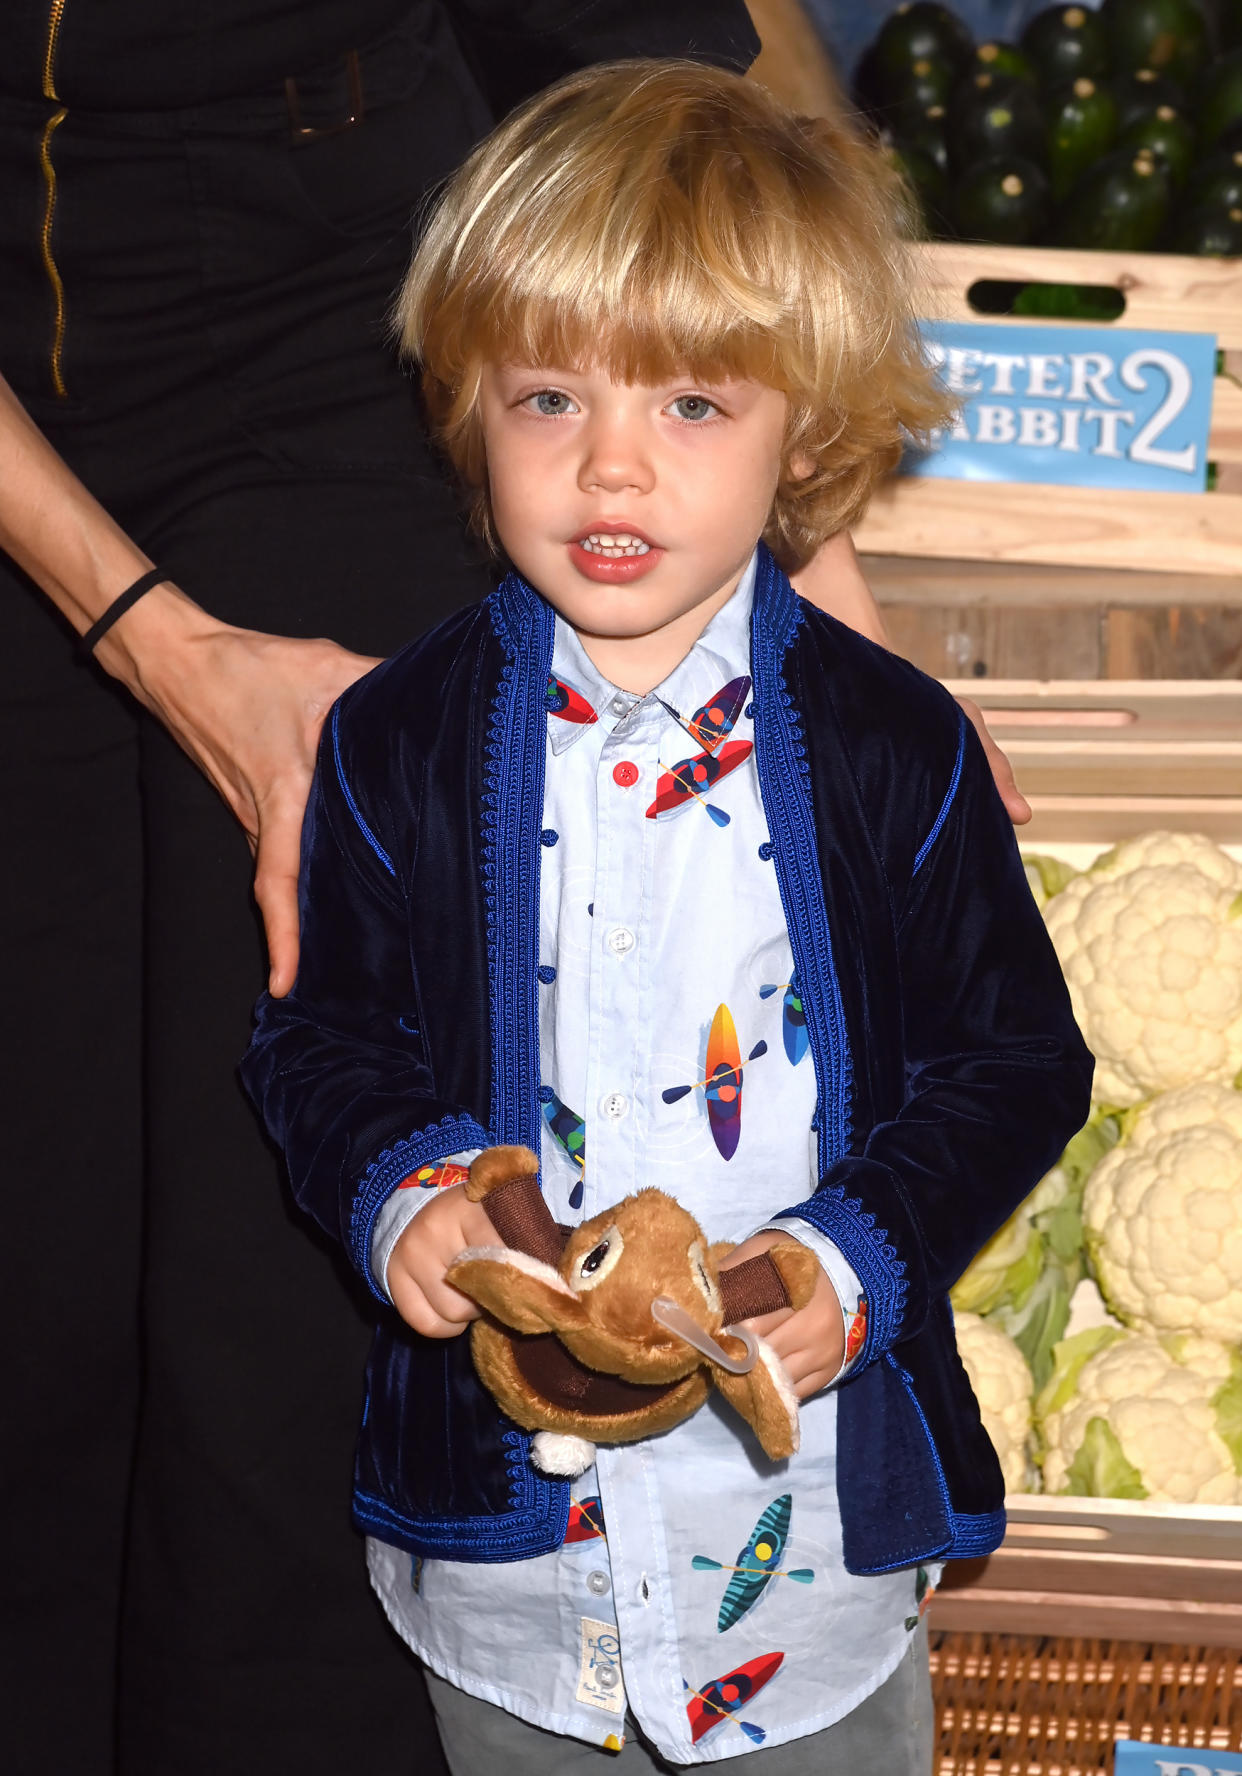 Mick Jagger's son, Dev Jagger. (Dave J Hogan / Getty Images)